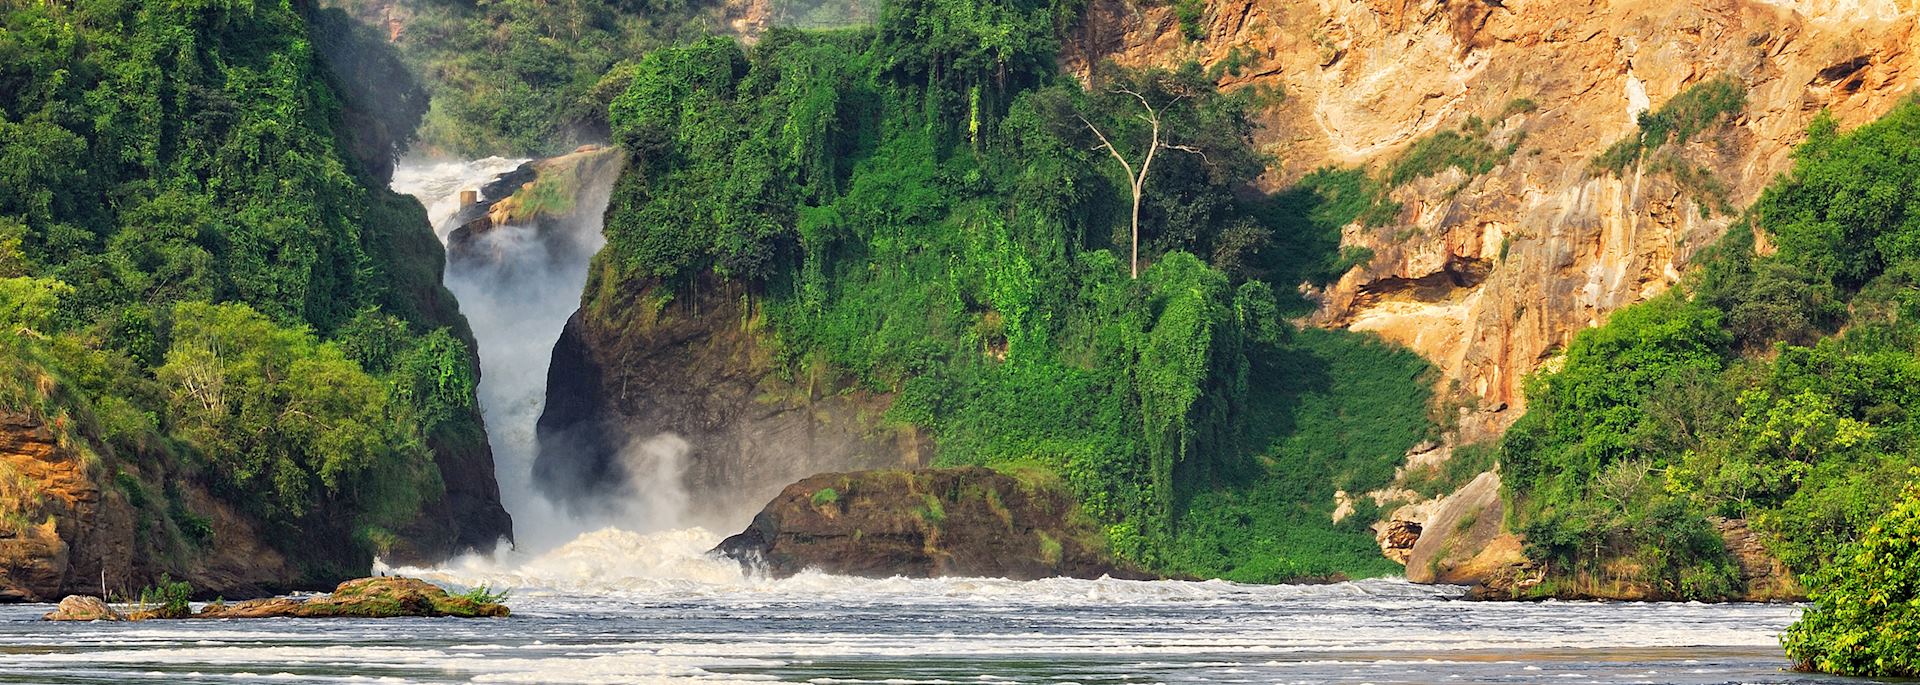 Murchison Falls on the Victoria Nile